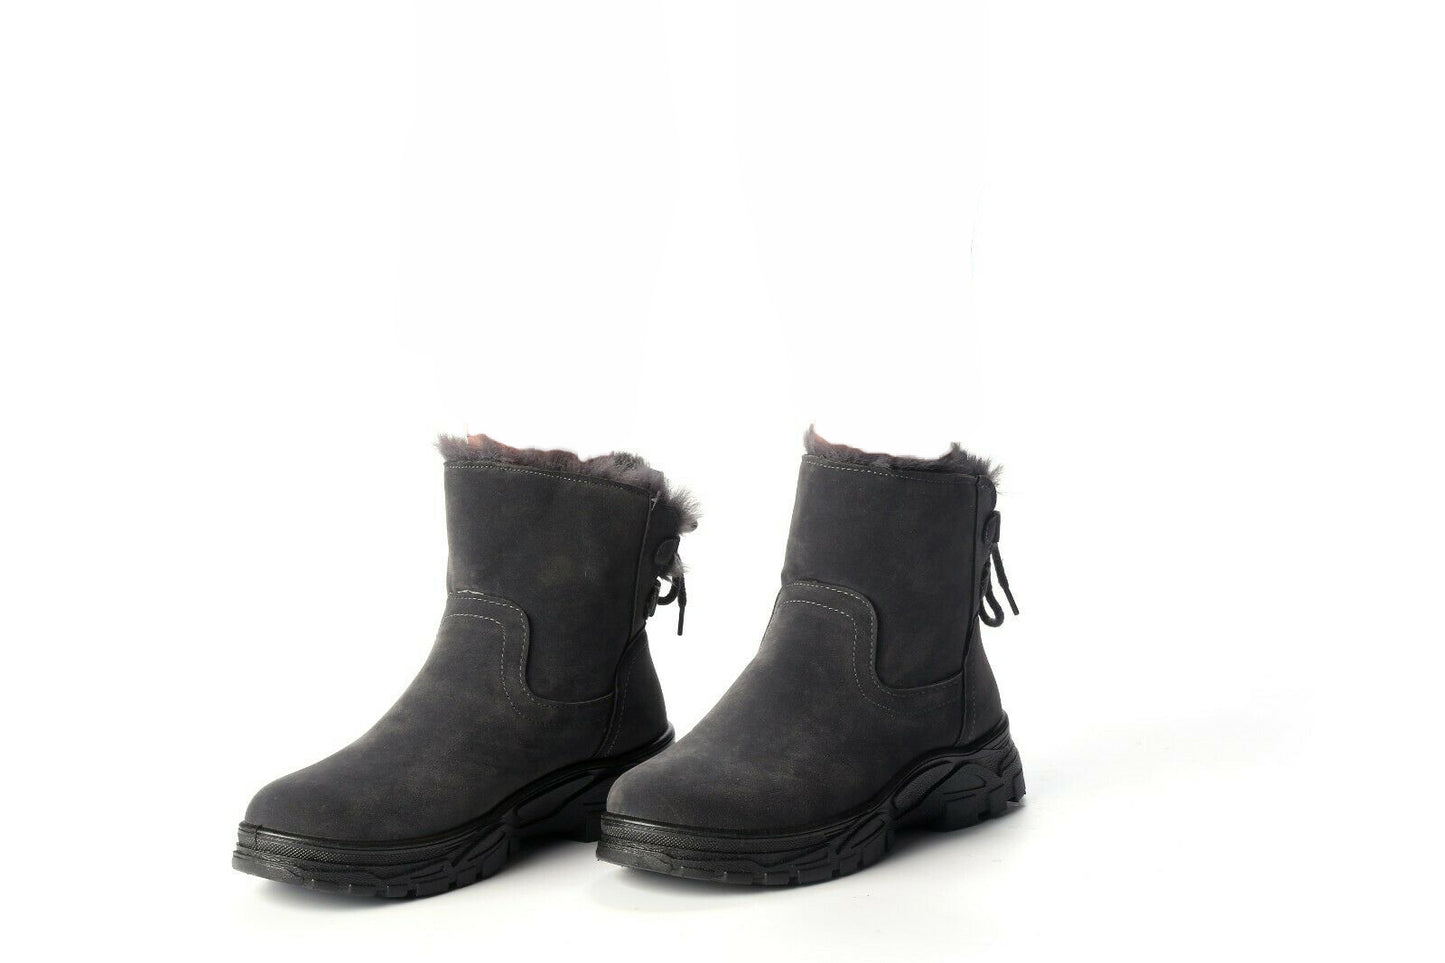 Fleece Lined Luxury Suede Ankle Winter Boots